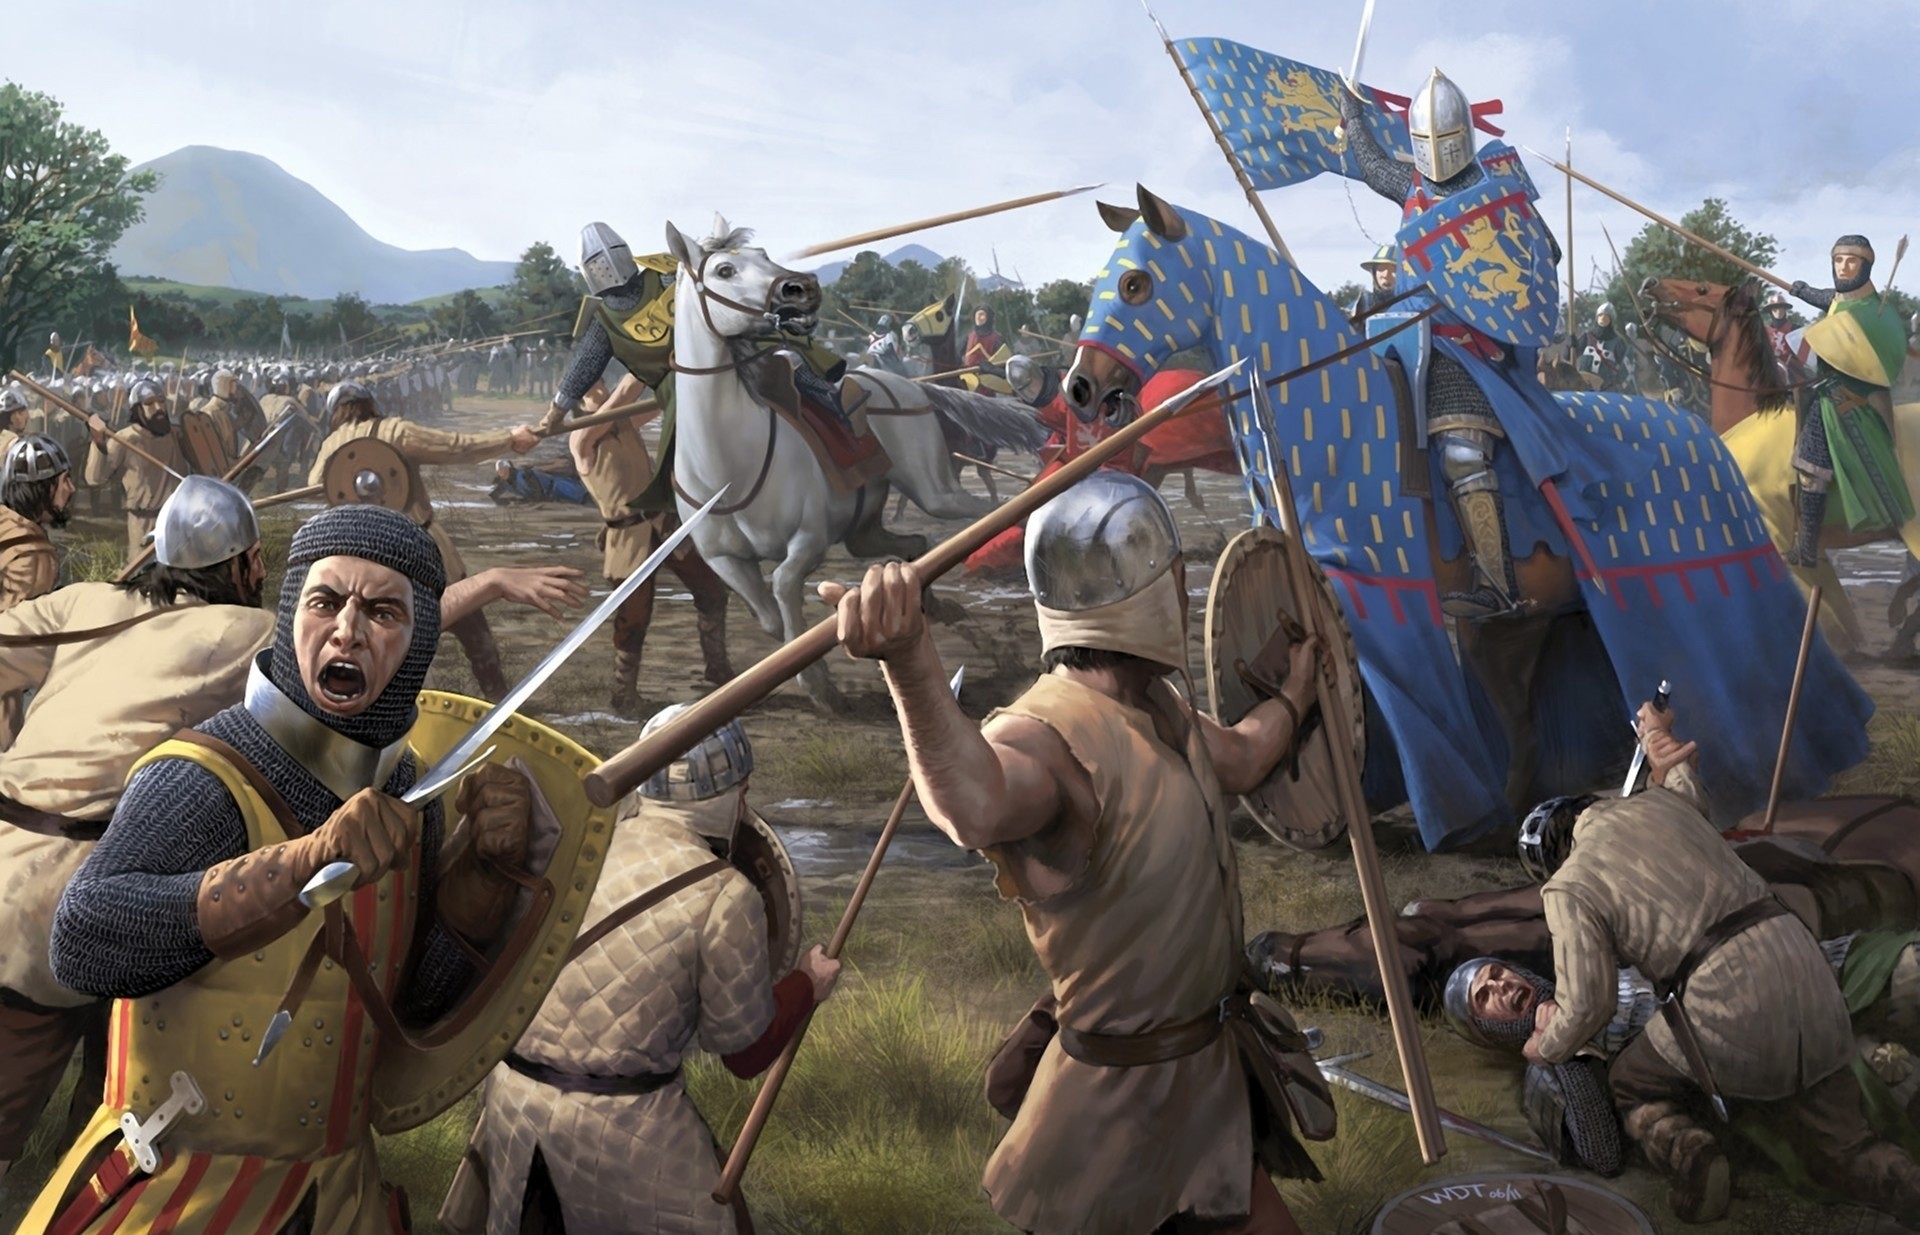 1920x1235 Medieval Battle Scene